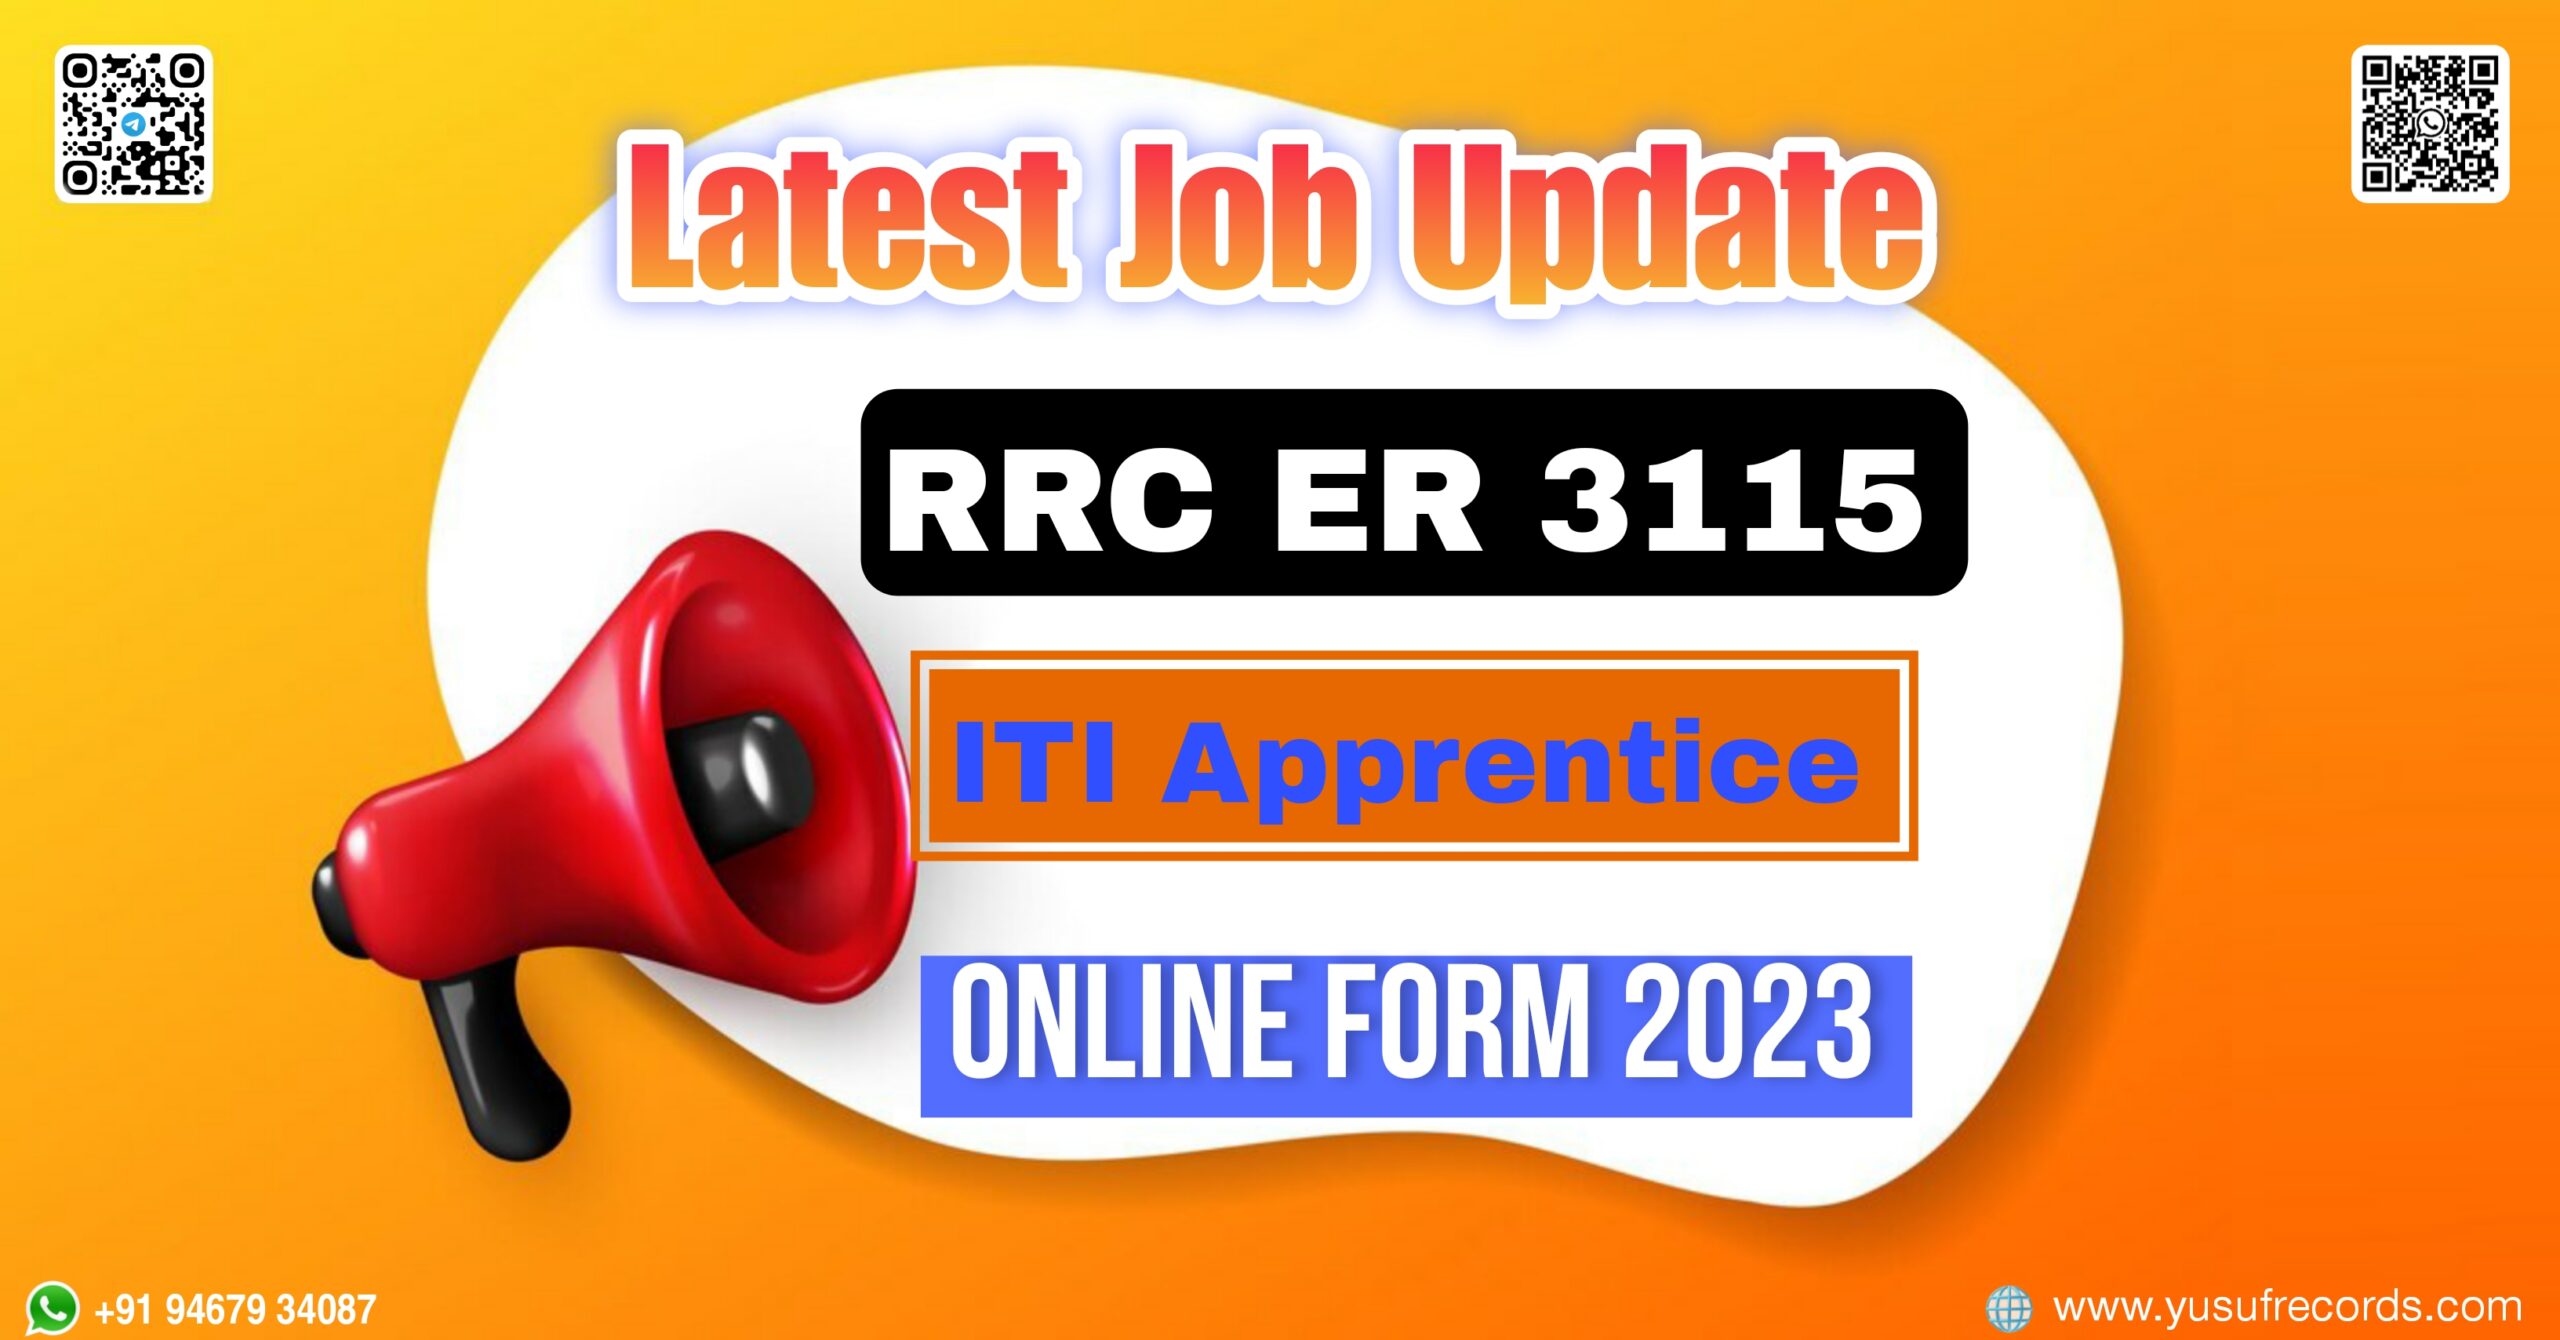 RRC ER 3115 ITI Apprentice Online Form 2023 Yusufrecords.com